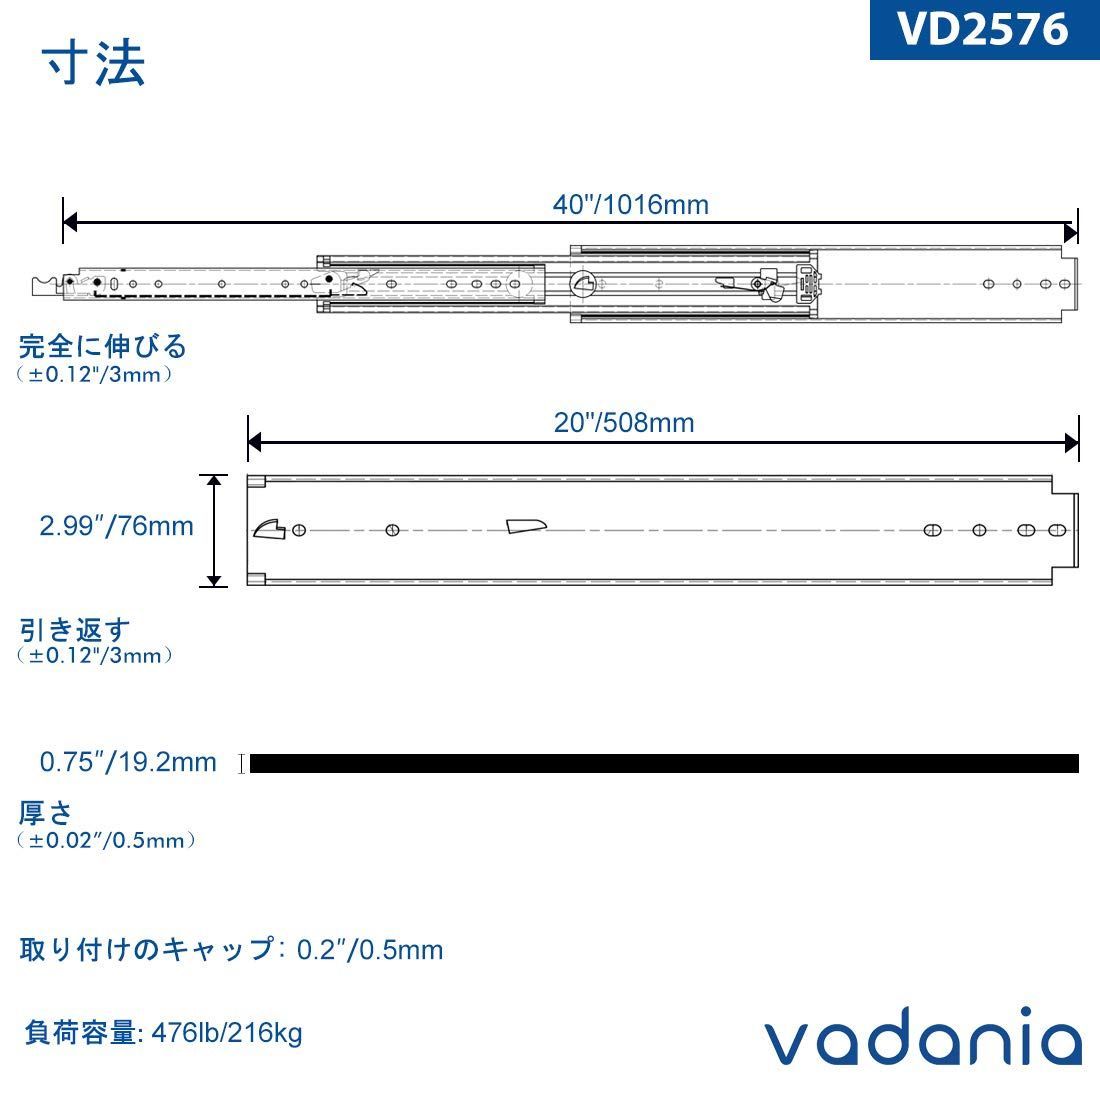 VADANIA 超重量用スライドレール ロック付き 1400mm Heavy Duty引き出しスライド VD2576 工業用 左右1セット - 1